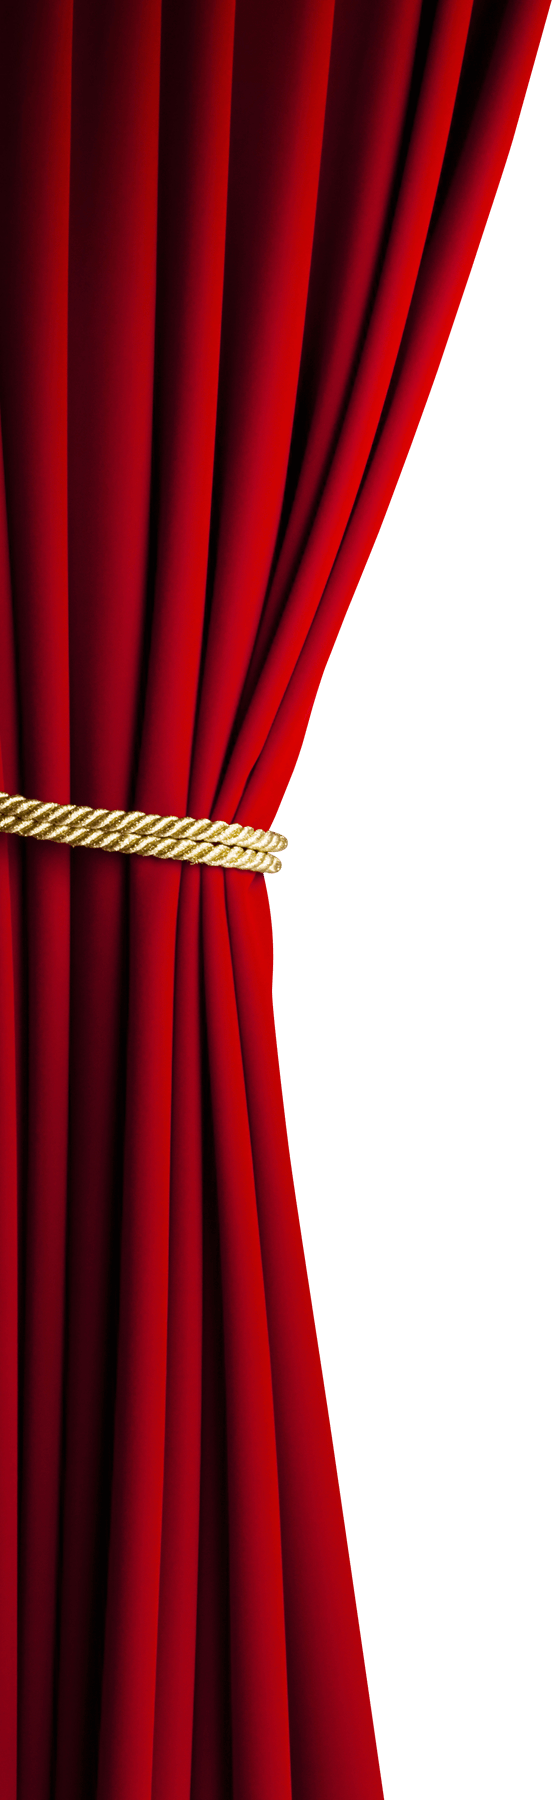 Theatre Curtain Transparent Background